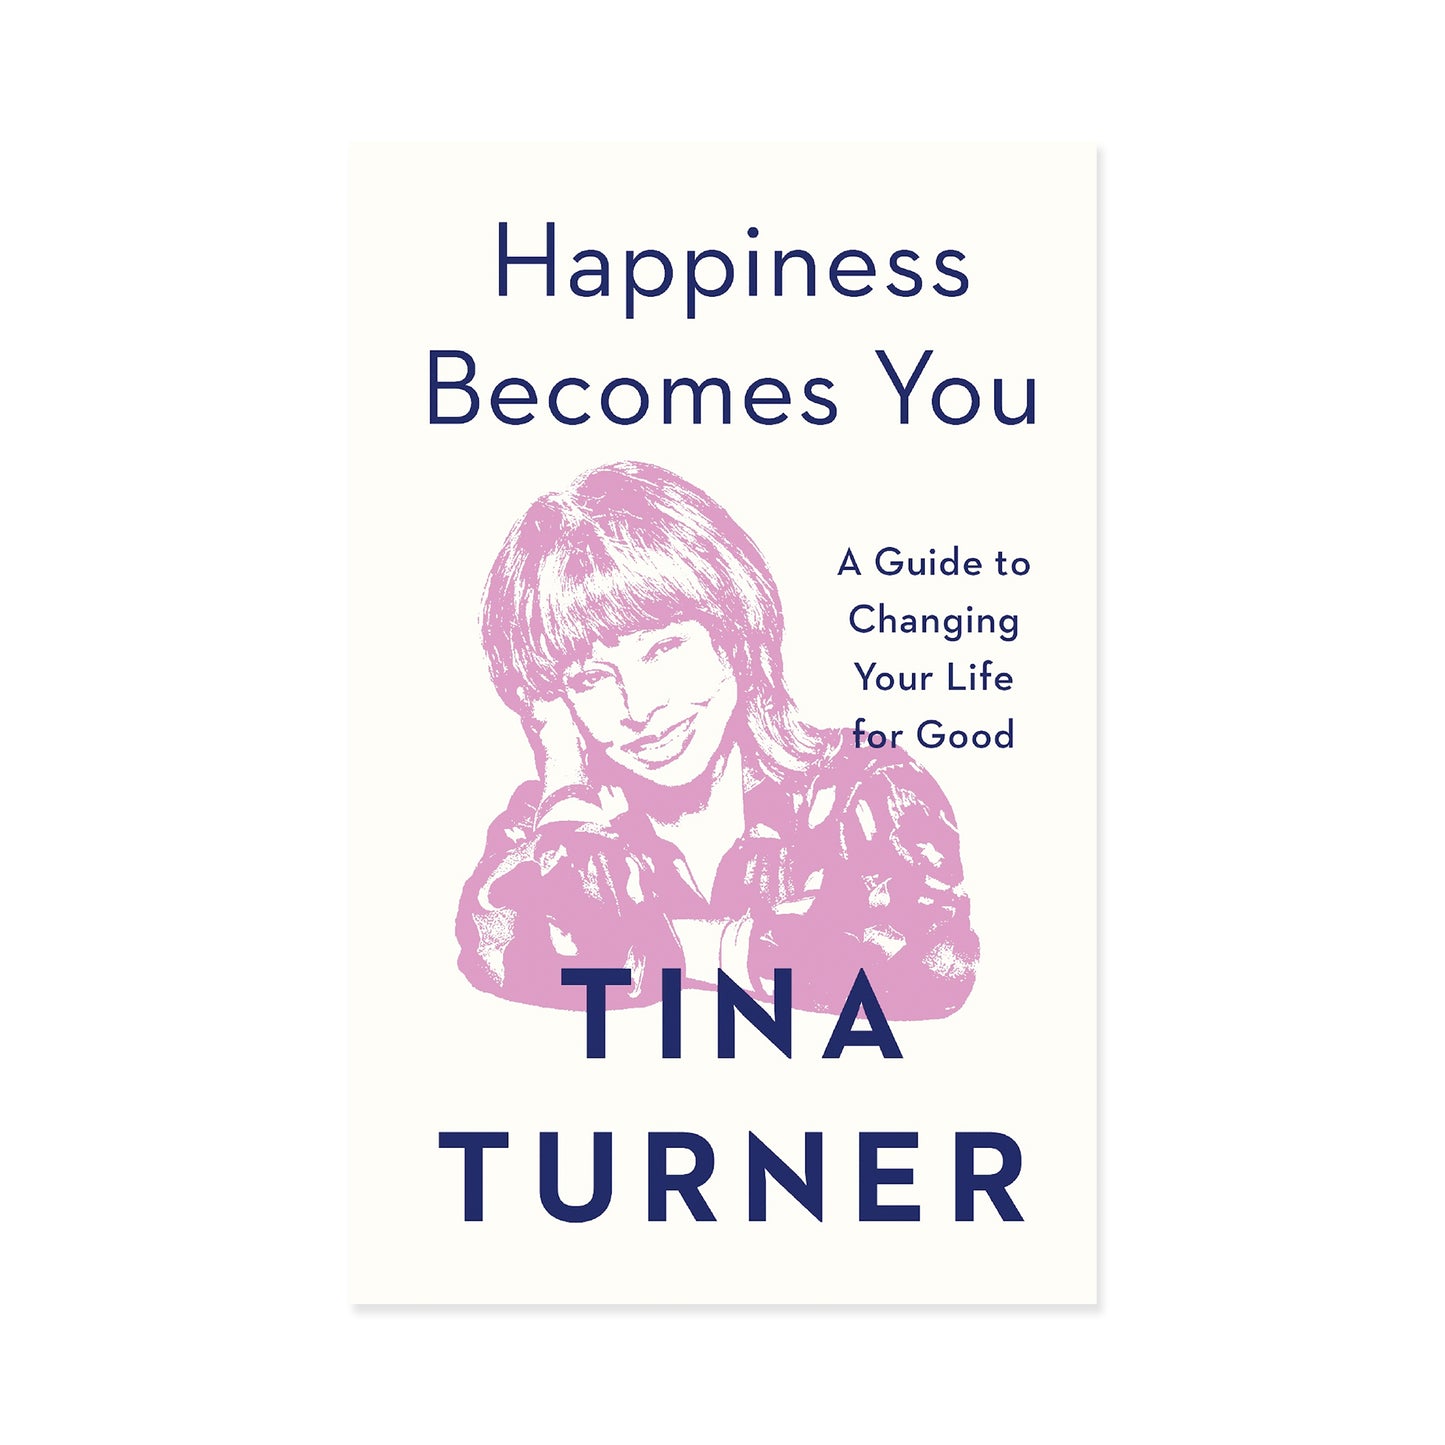 TINA Happiness Becomes You Book